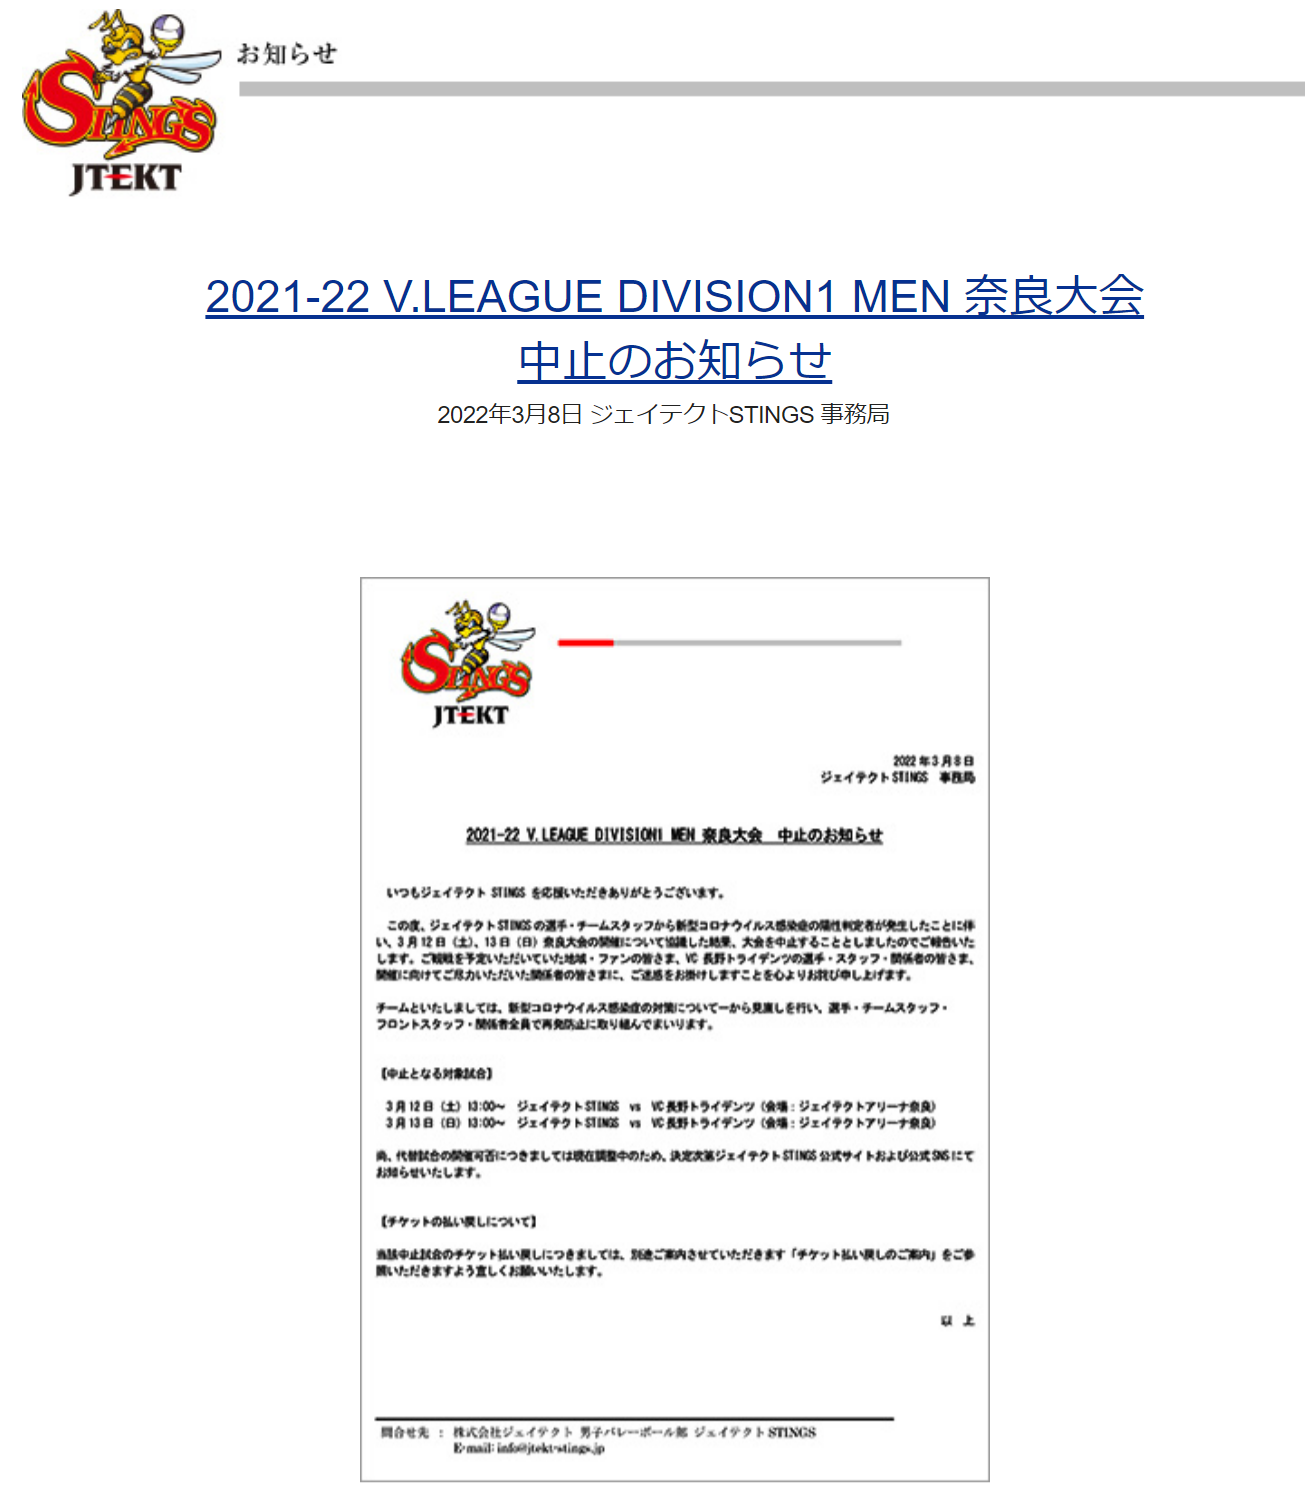 2021-22 V.LEAGUE DIVISION1 MEN 奈良大会 中止のお知らせ